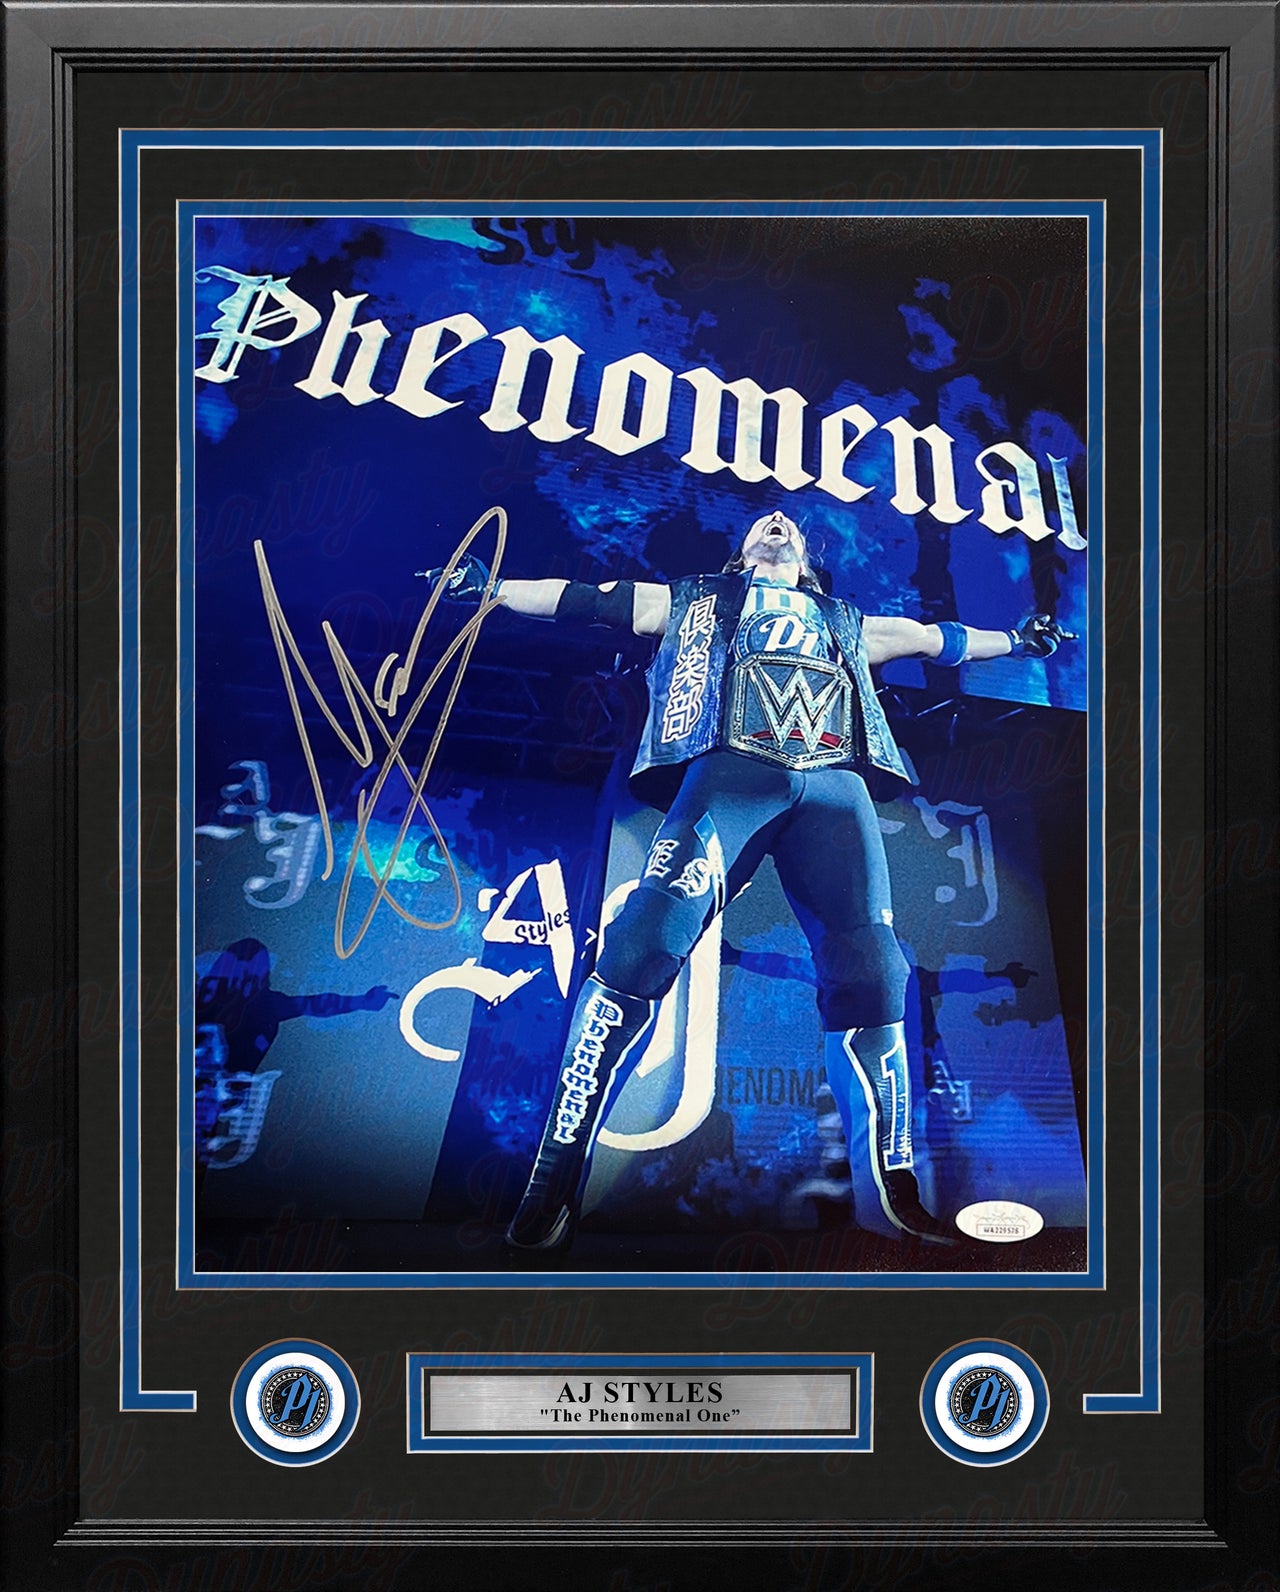 AJ Styles Phenomenal Championship Entrance Autographed Framed WWE Wrestling Photo - Dynasty Sports & Framing 